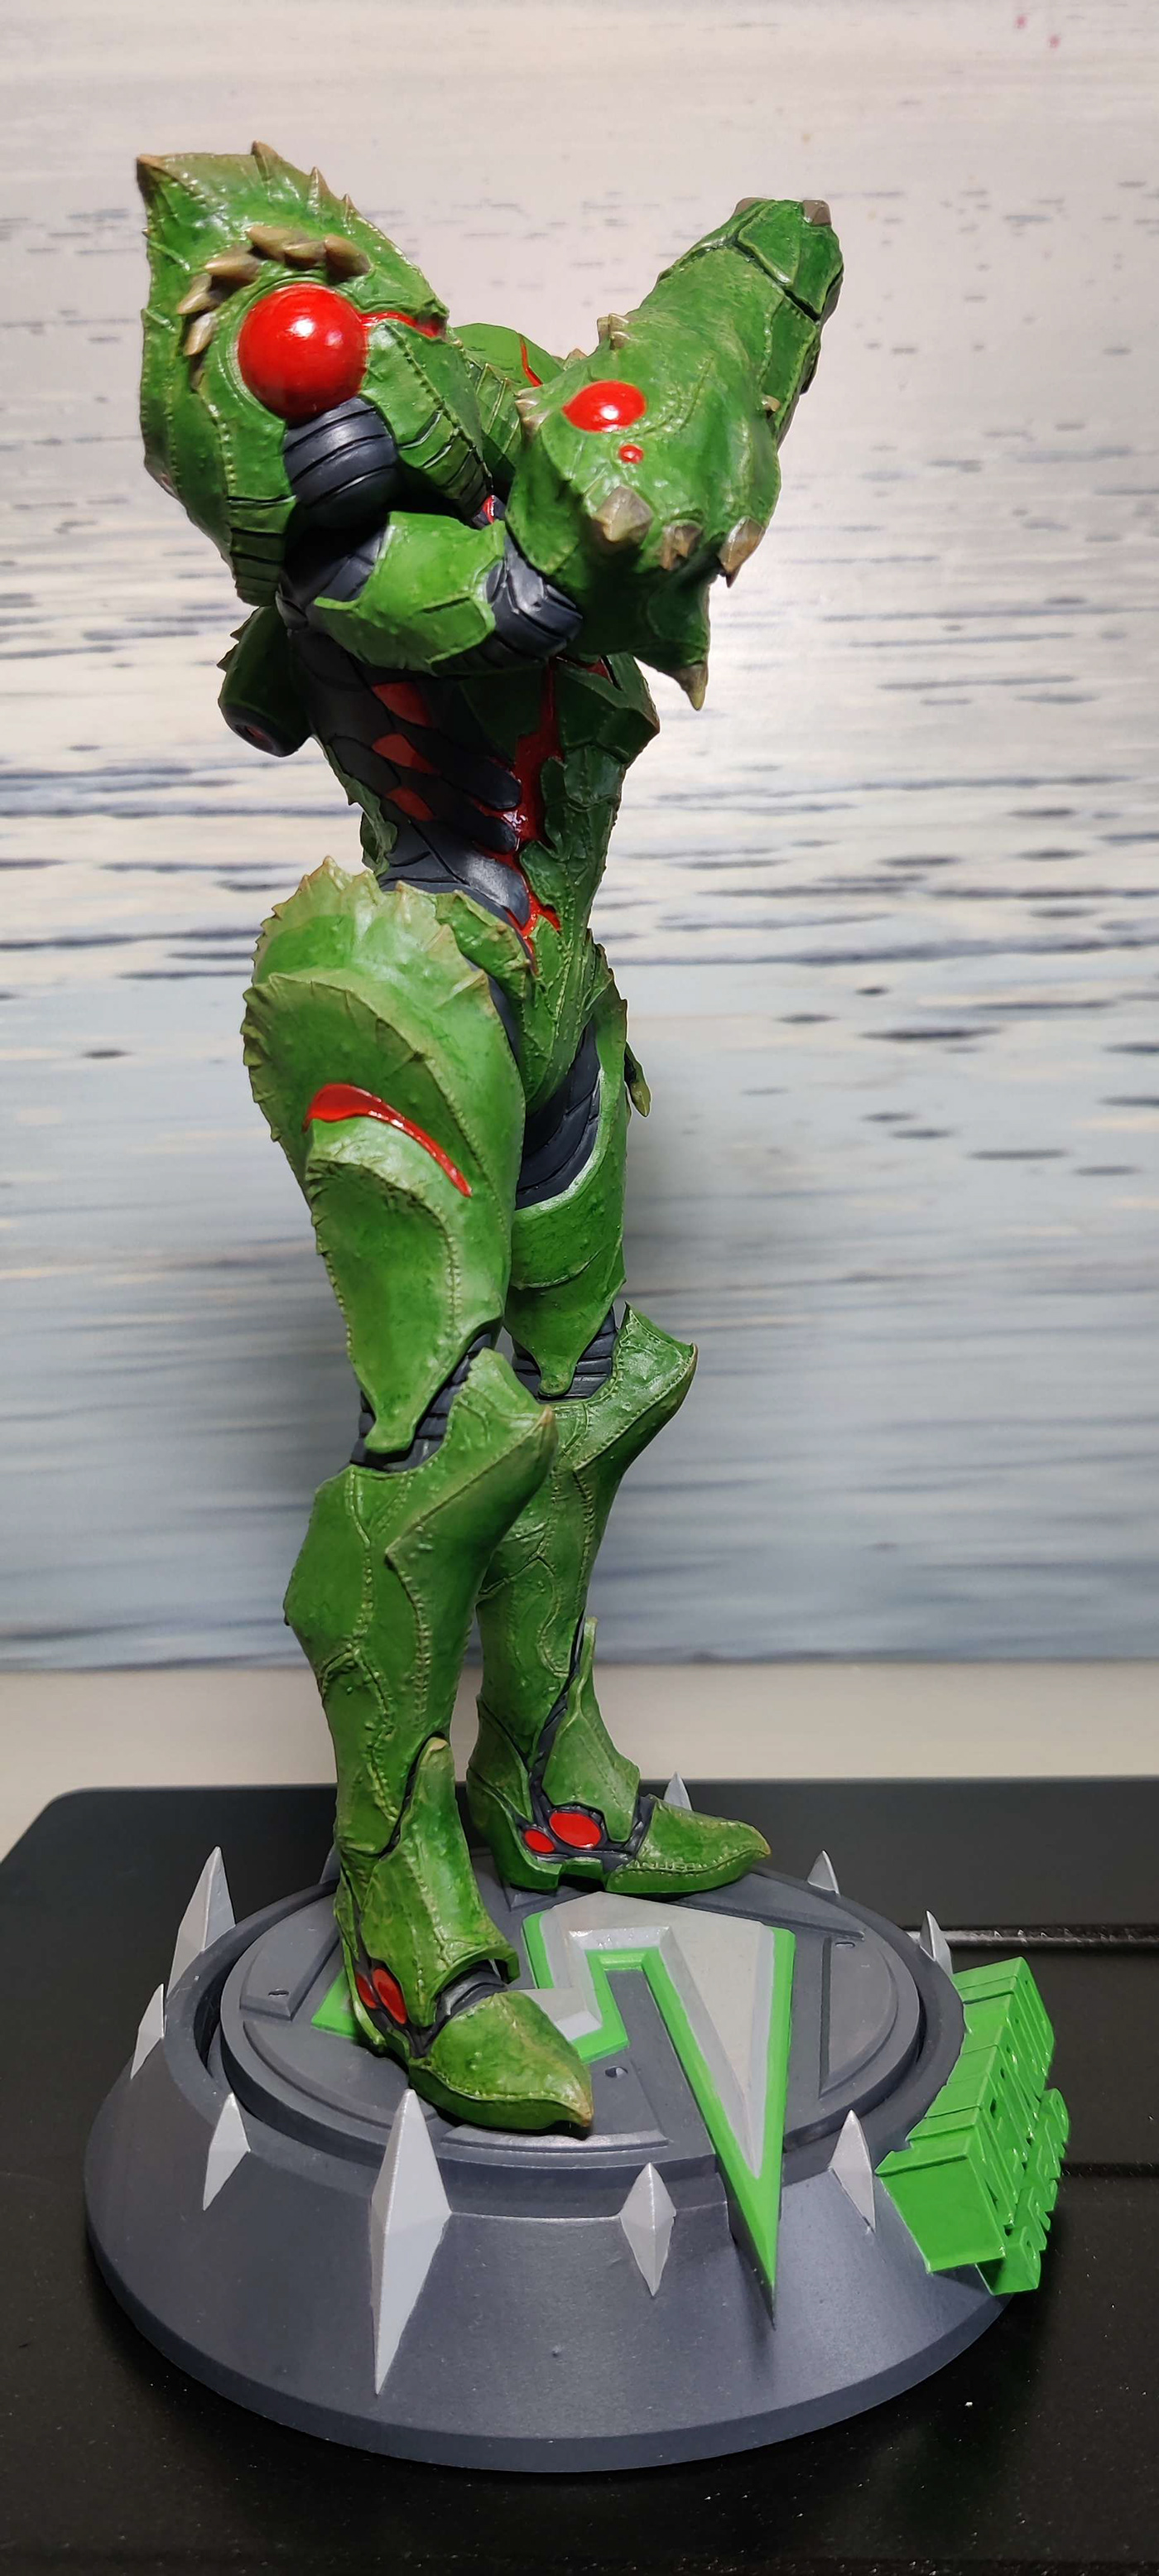 samus Samus Aran Nintendo Zbrush creature monster zbrush sculpt 3d modeling Metroid Dread Metroid Suit